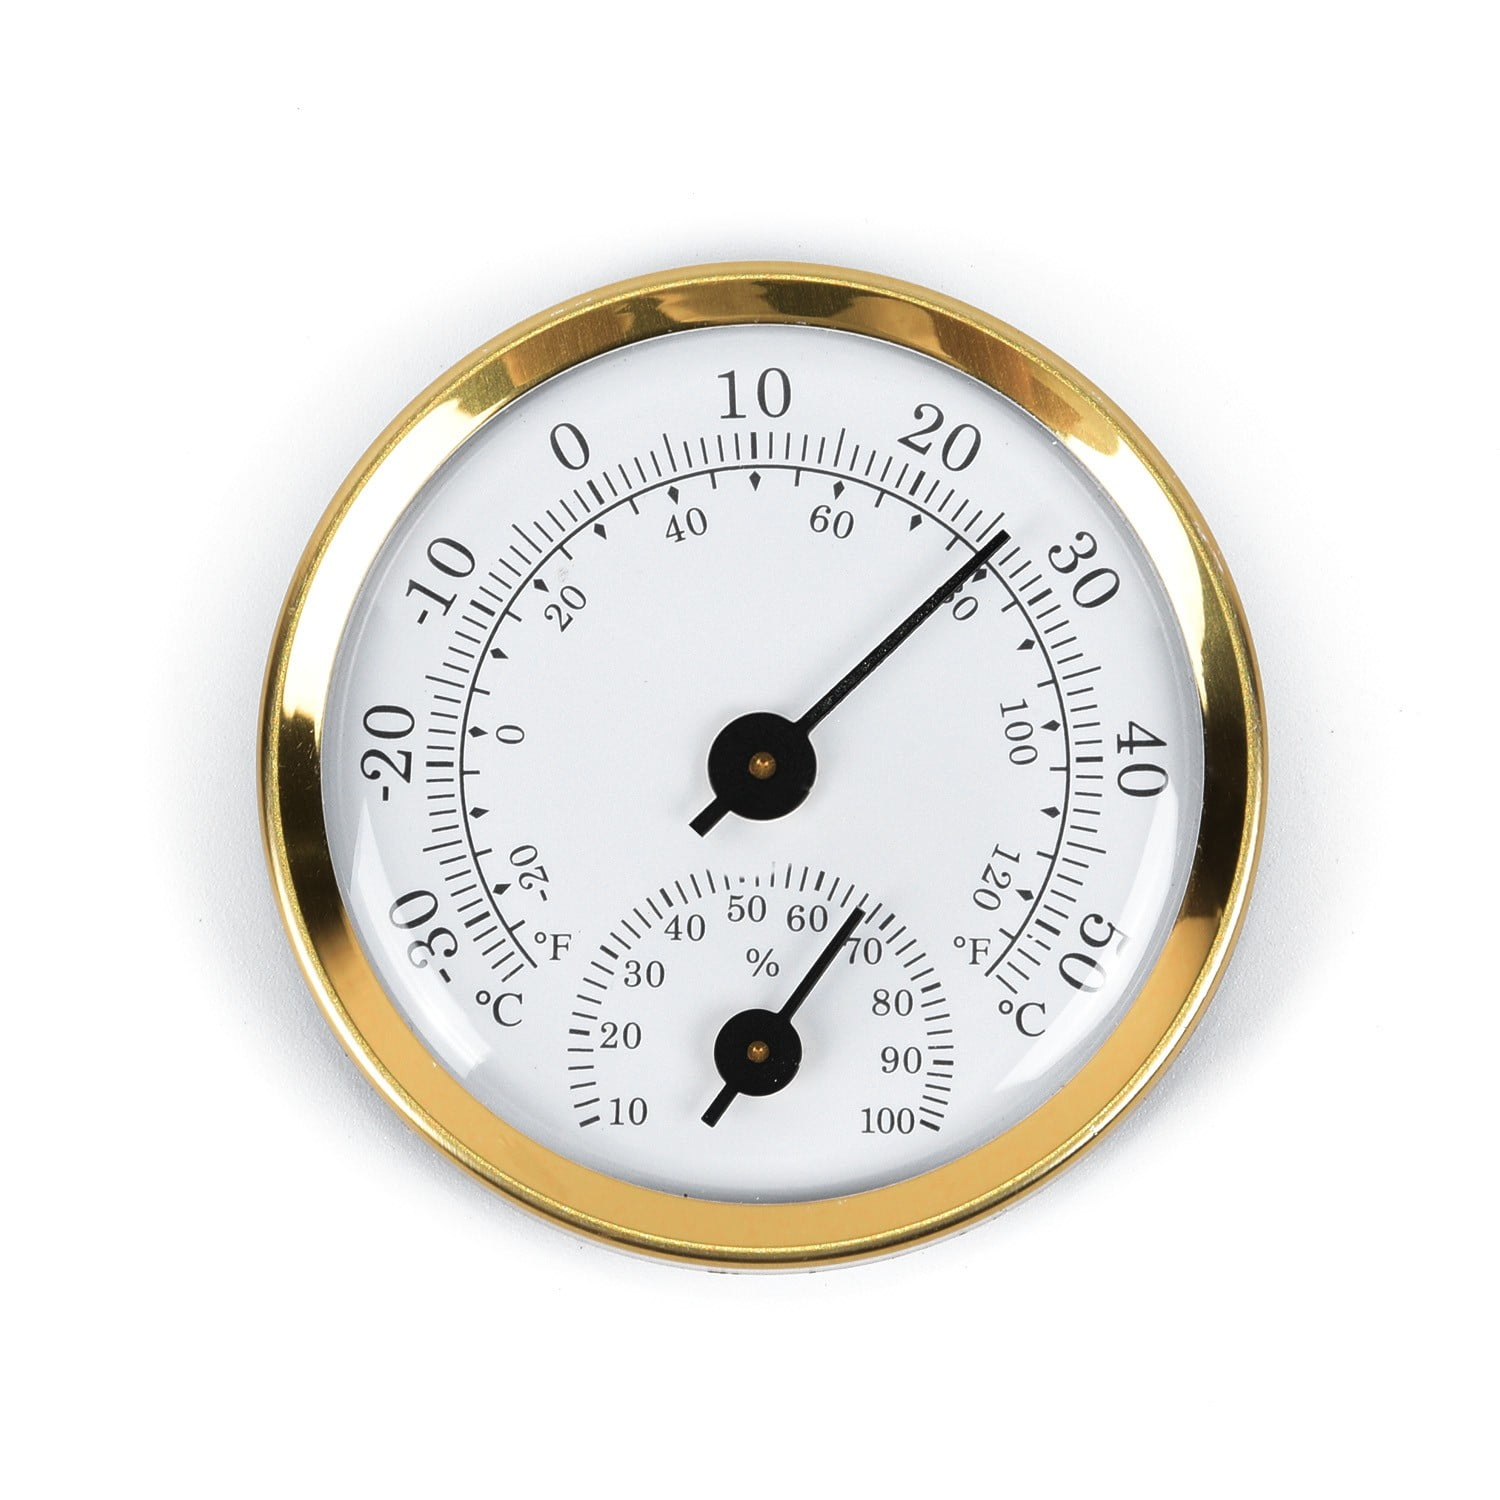 Indoor Analog Humidity Temperature Meter Gauge Thermometer Hygrometer A2U7 L1Y4 